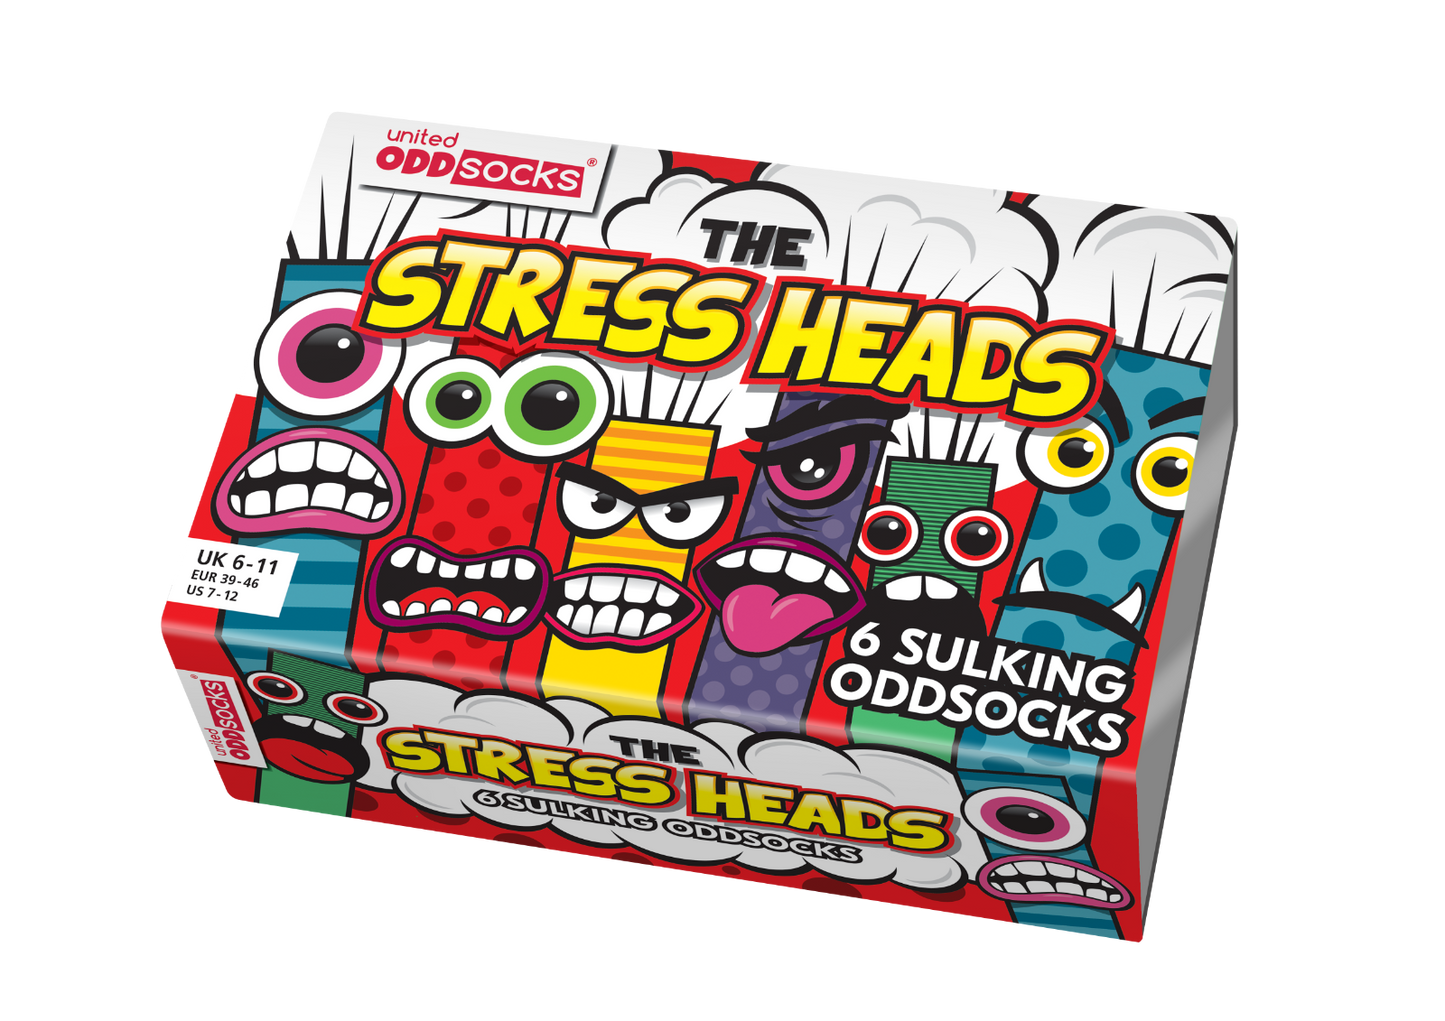 United Oddsocks Men's Stress Heads 6 Odd Socks Gift Box